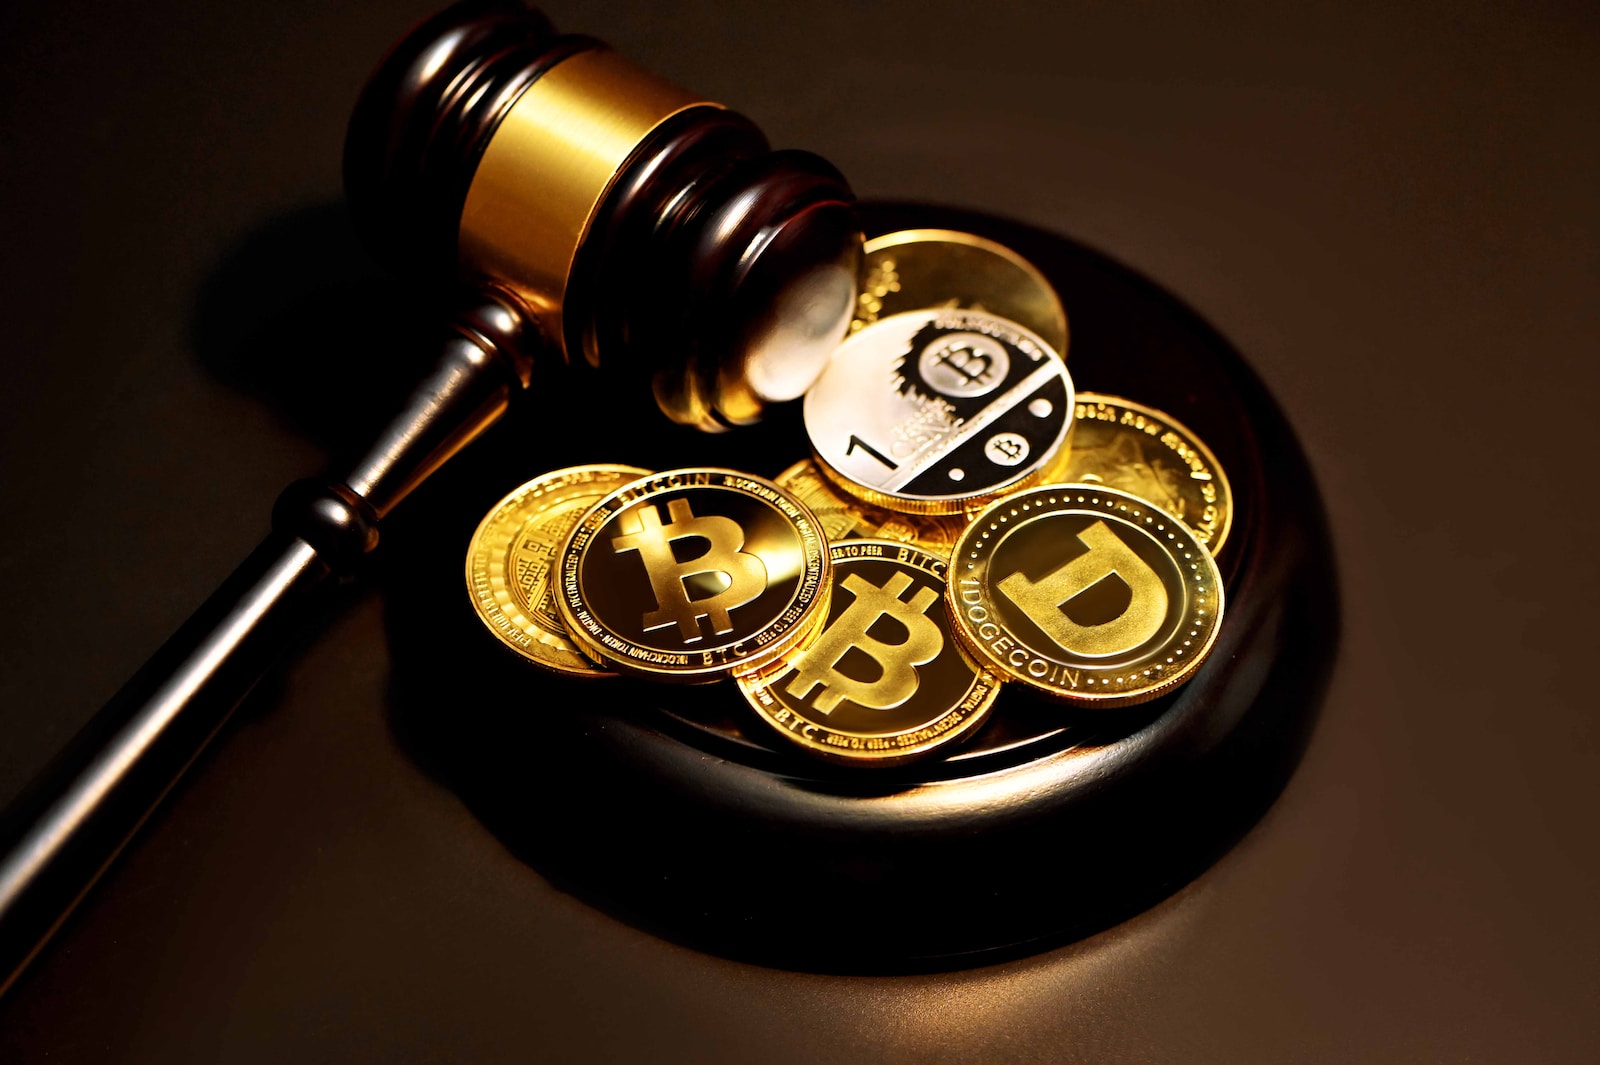 CEO of Titanium Blockchain Sentenced For $21 Million Cryptocurrency Fraud